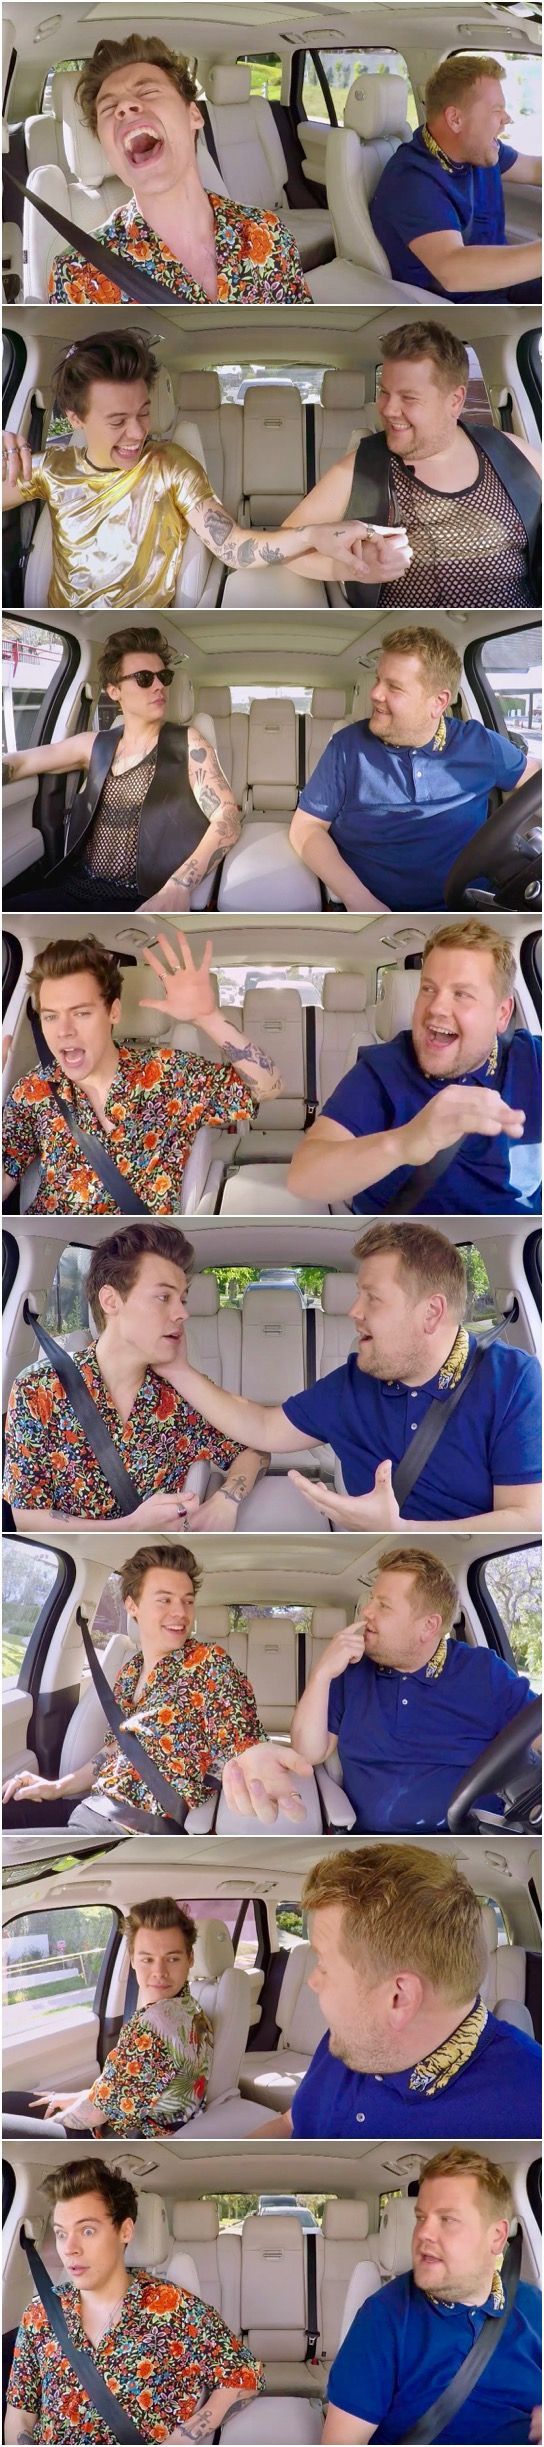 NEW | Pure Joy! Harrys Carpool Karaoke on The Late Late Show with James Corden. Watch it here! Follow rickysturn/harry-styles